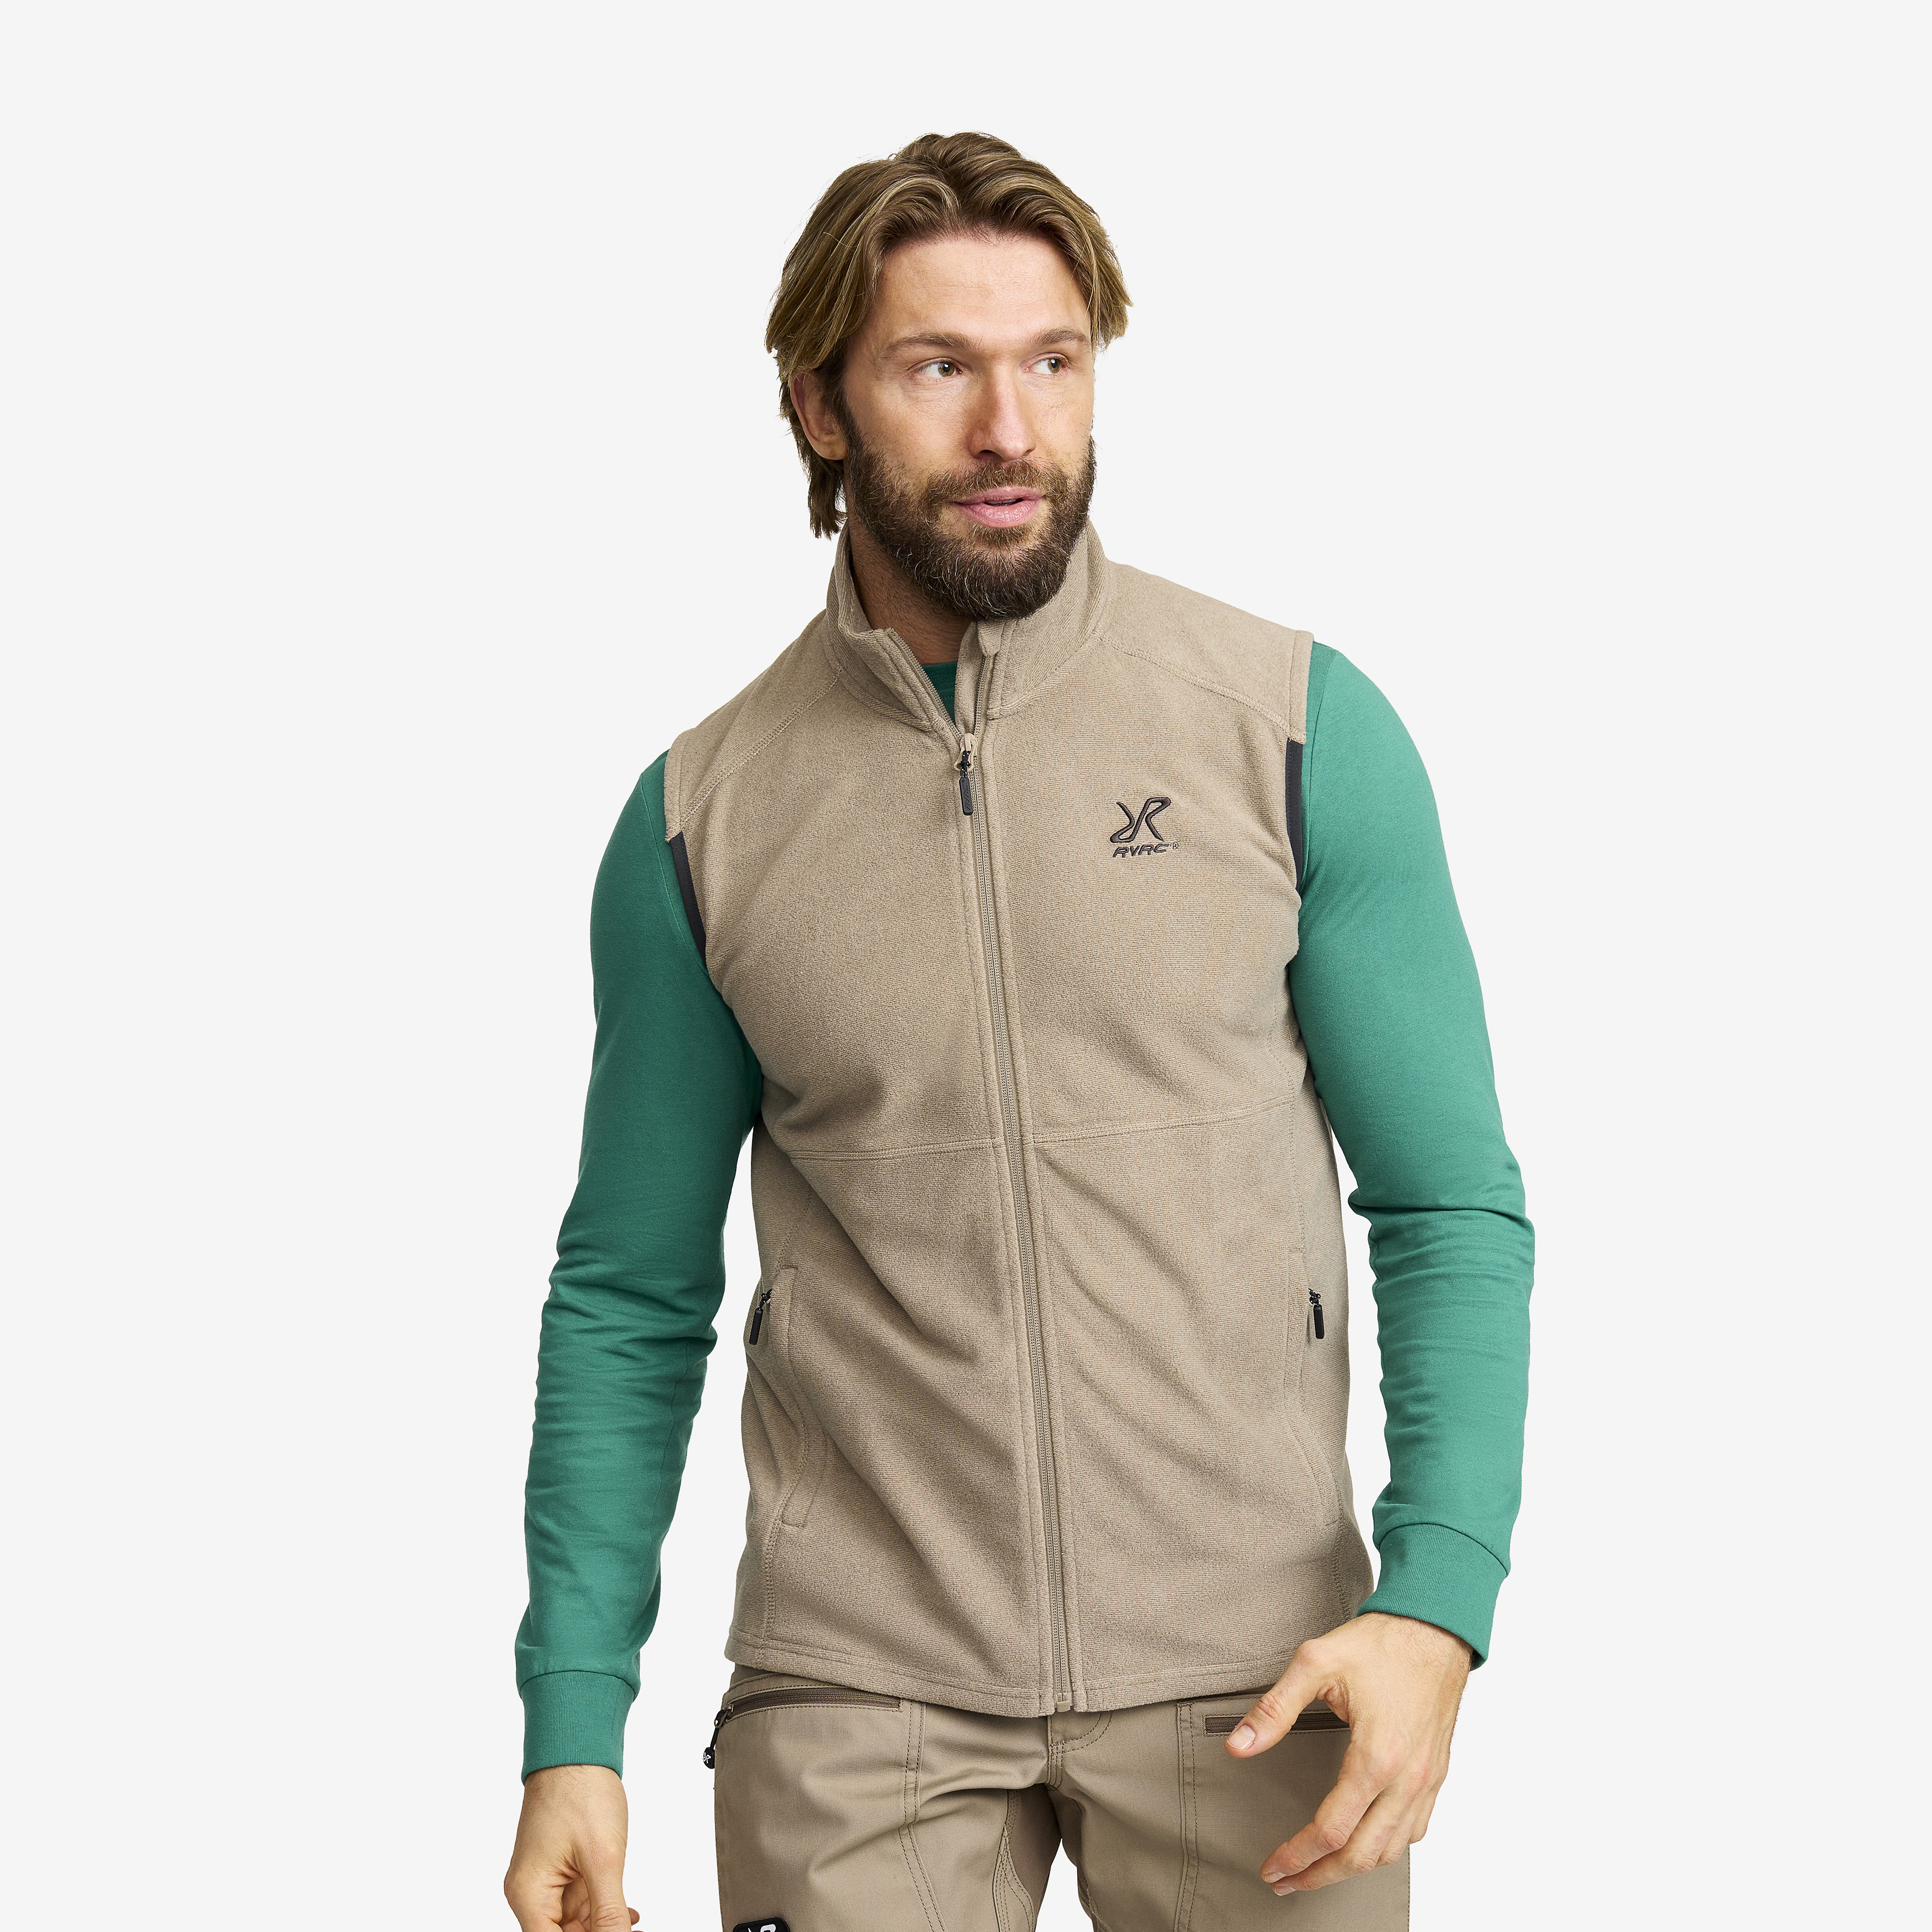 Men's Full Zip Polar Fleece Vest – Oregon Clothing Program Website